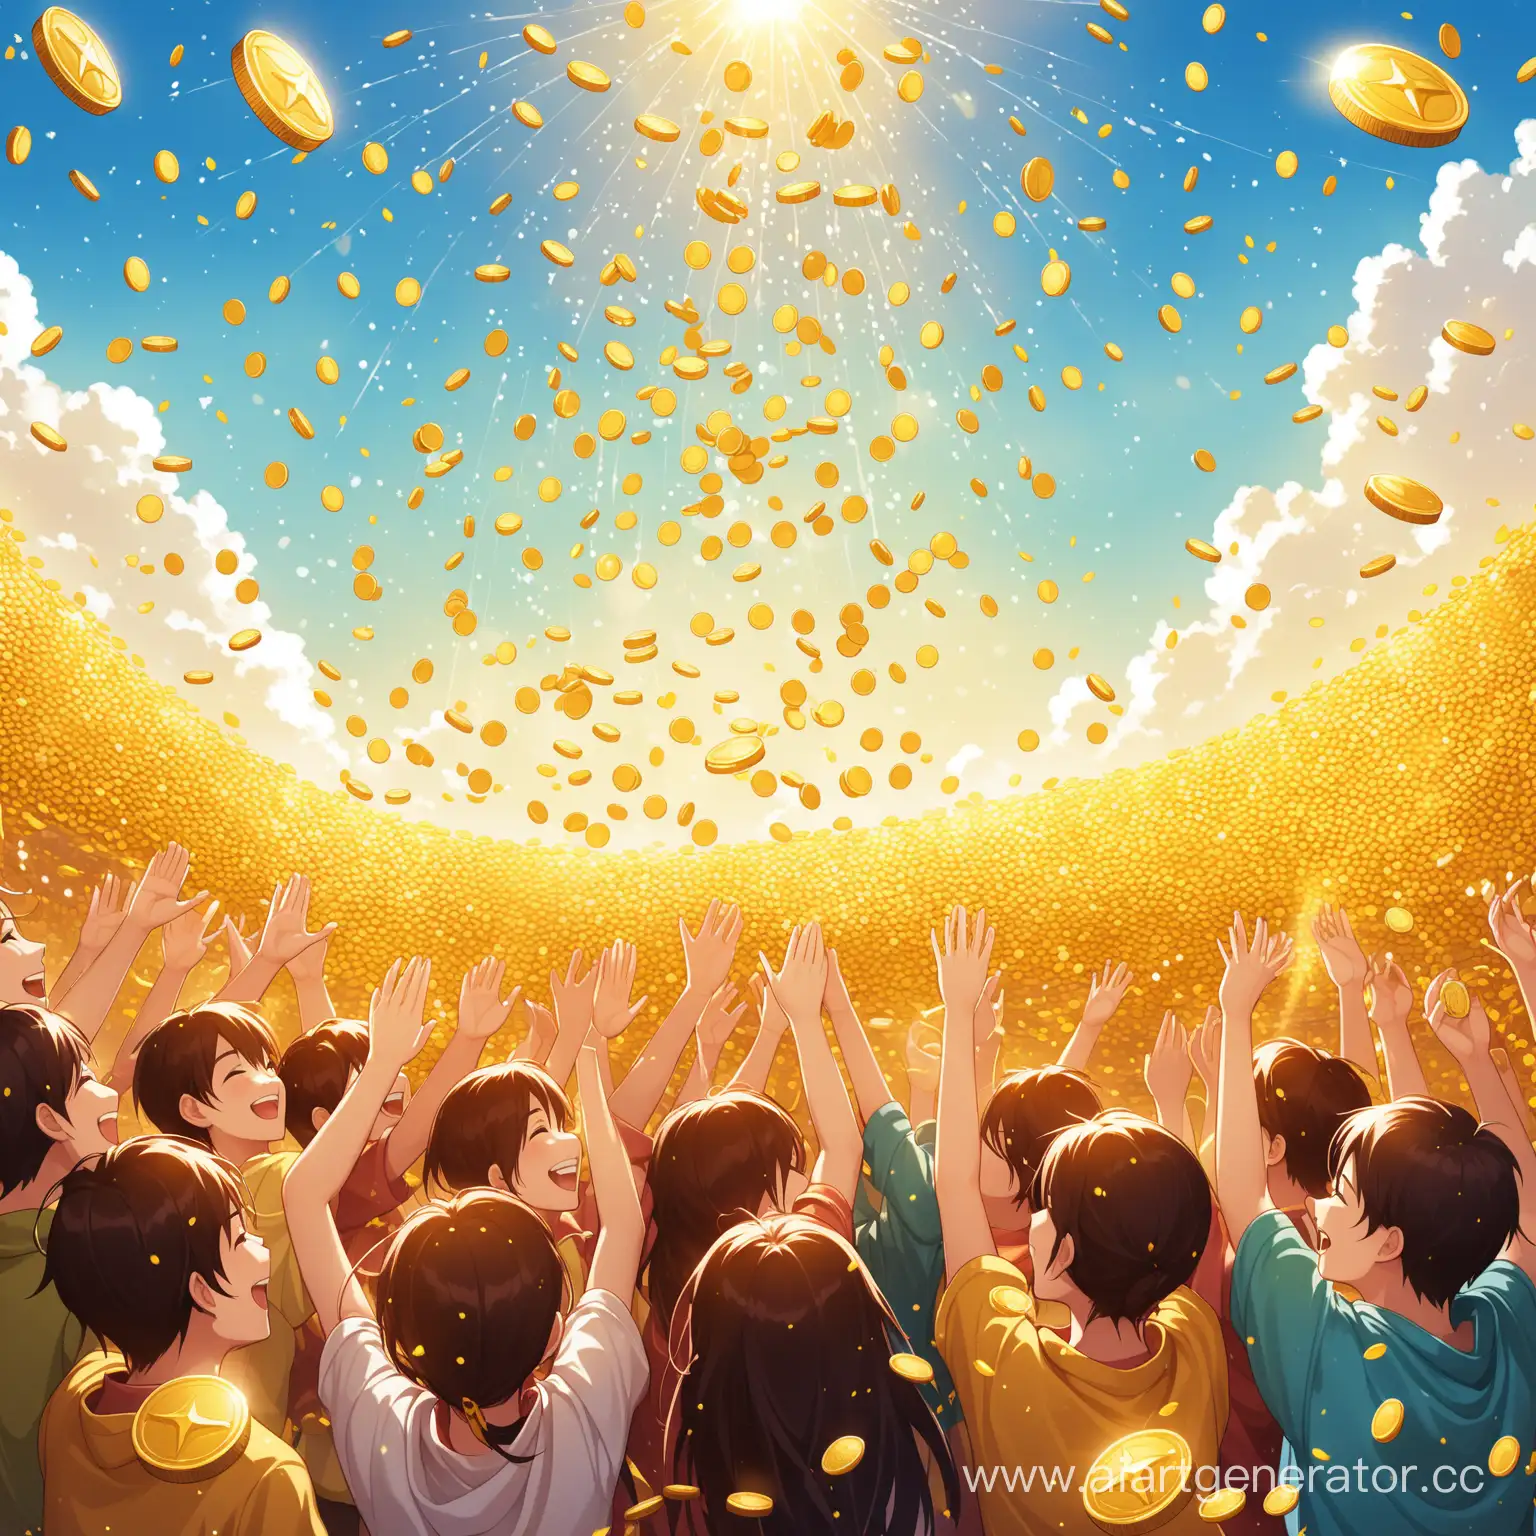 Happy-People-Enjoying-Golden-Coins-Rain